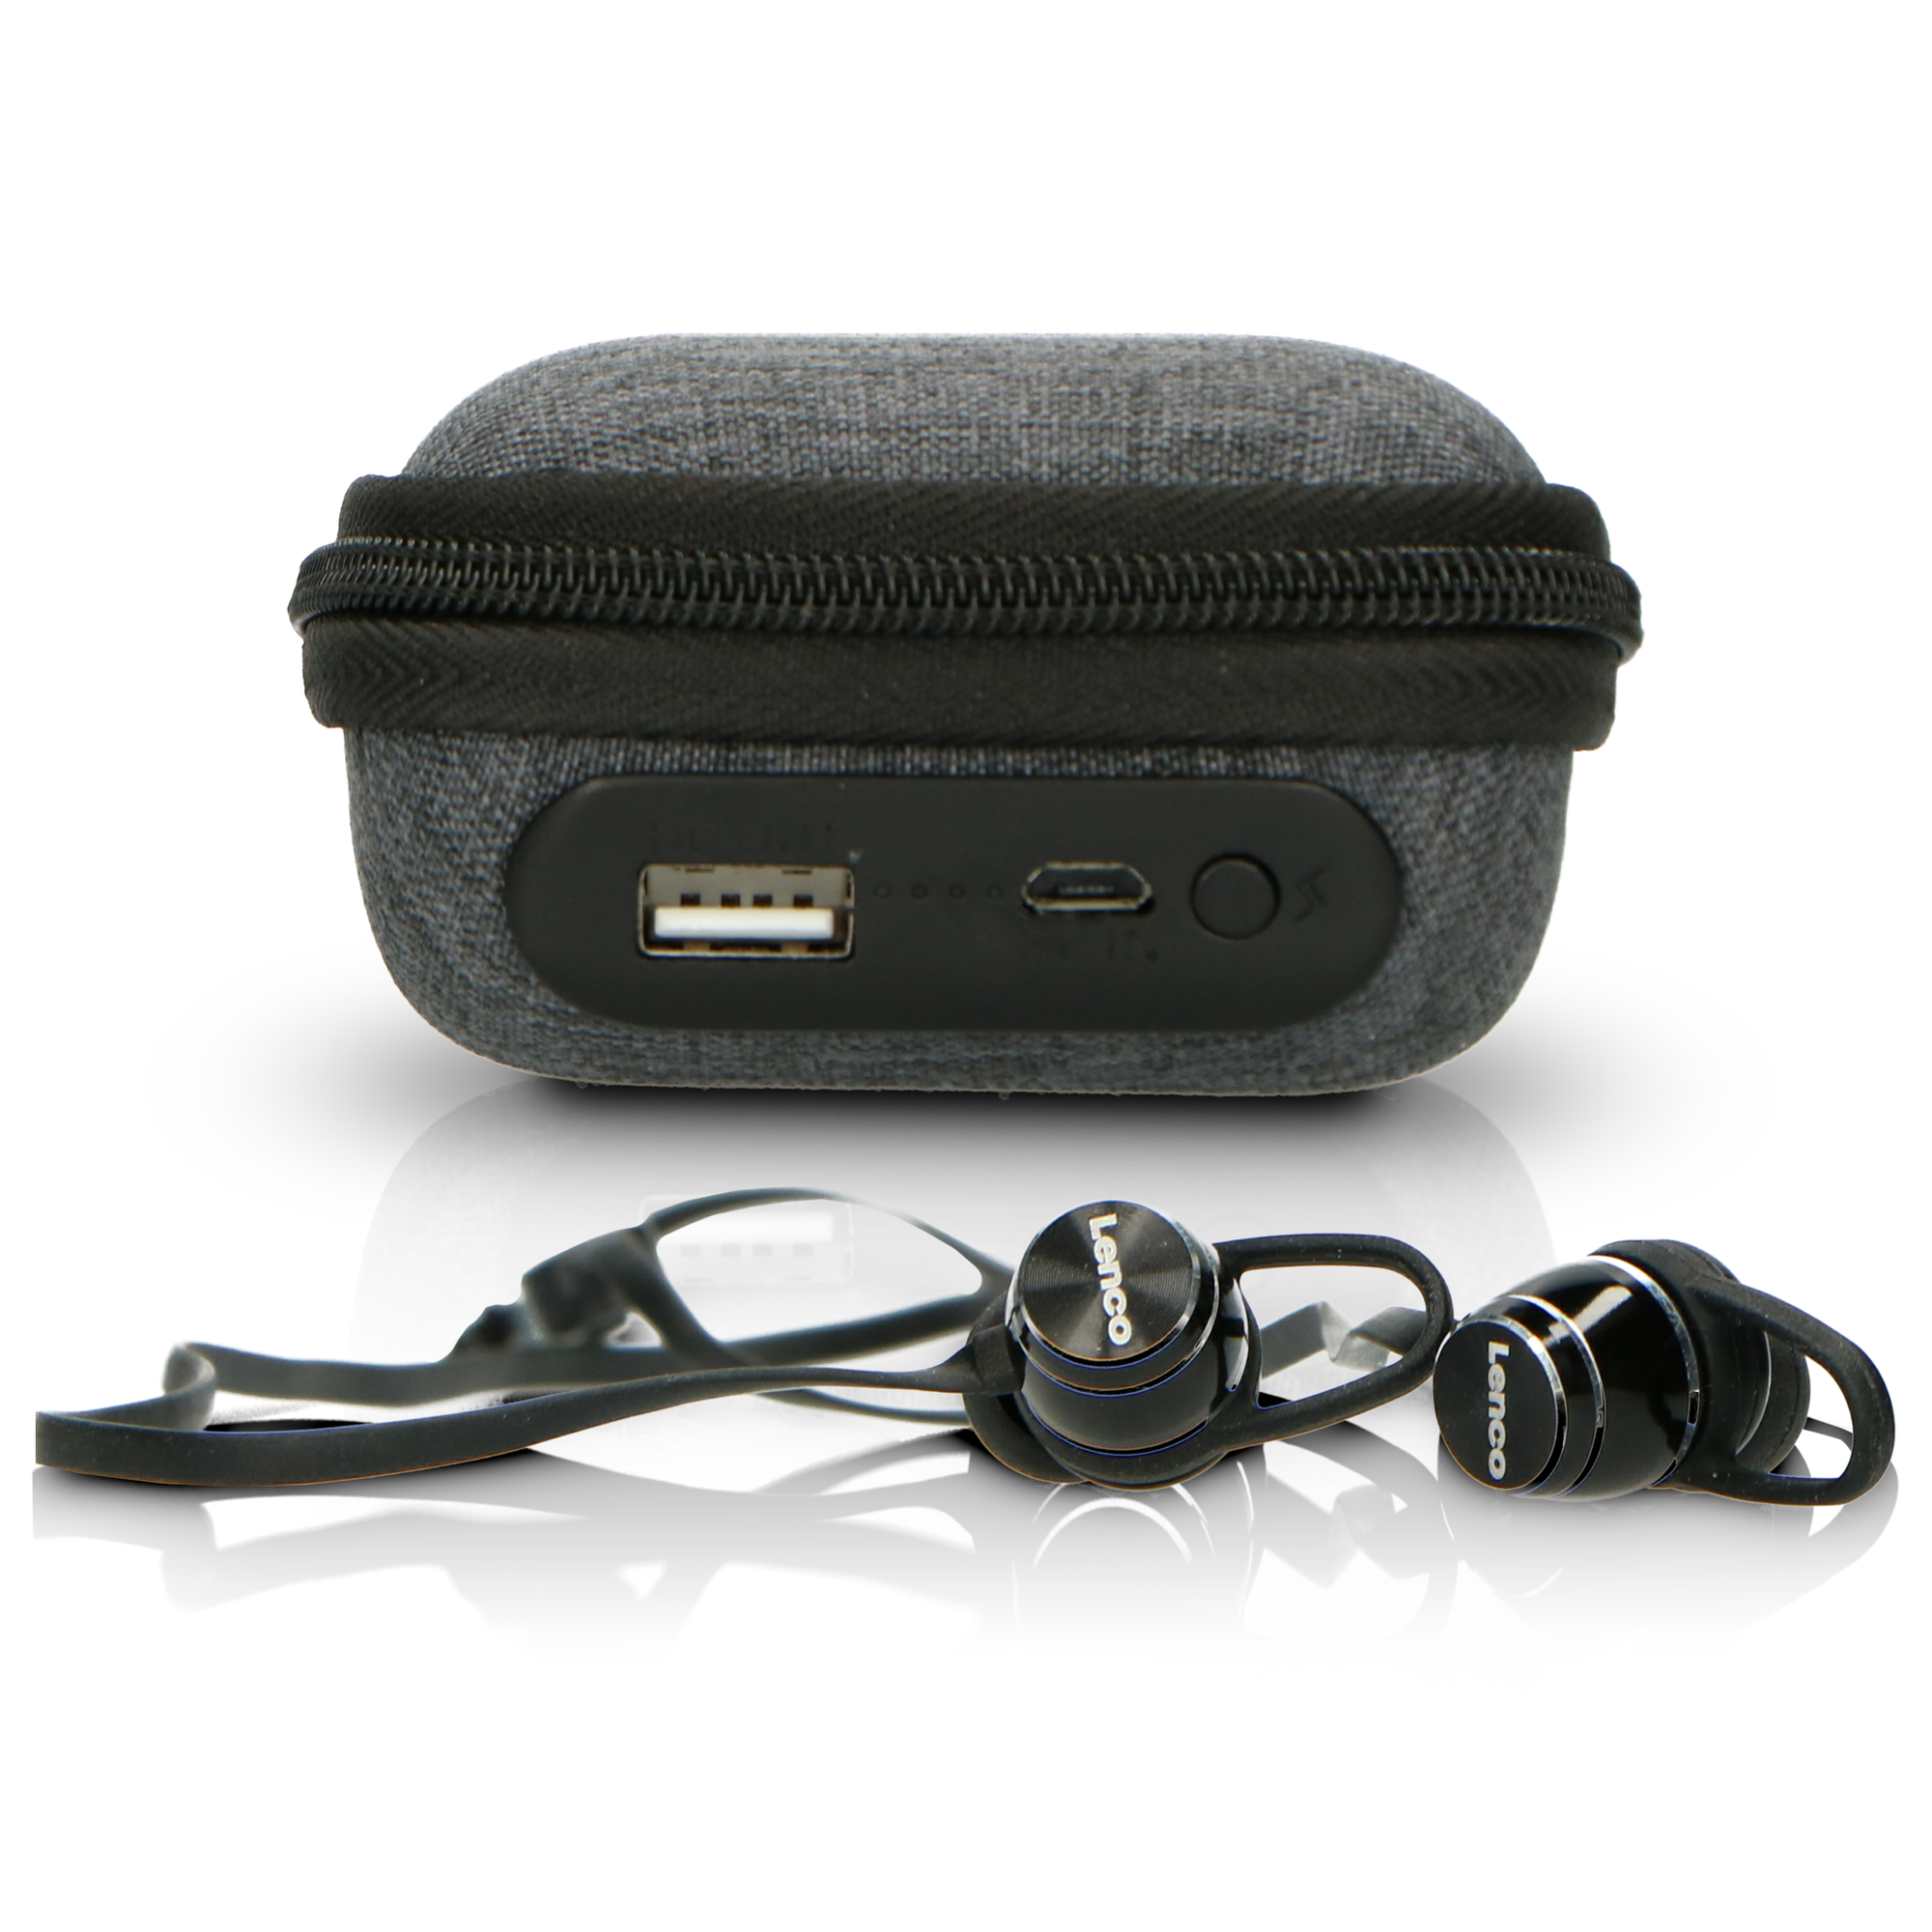 LENCO EPB-160BK sweatproof, mit - In-ear Bluetooth Bluetooth Powerbank-Tasche Schwarz-Grau Headphone